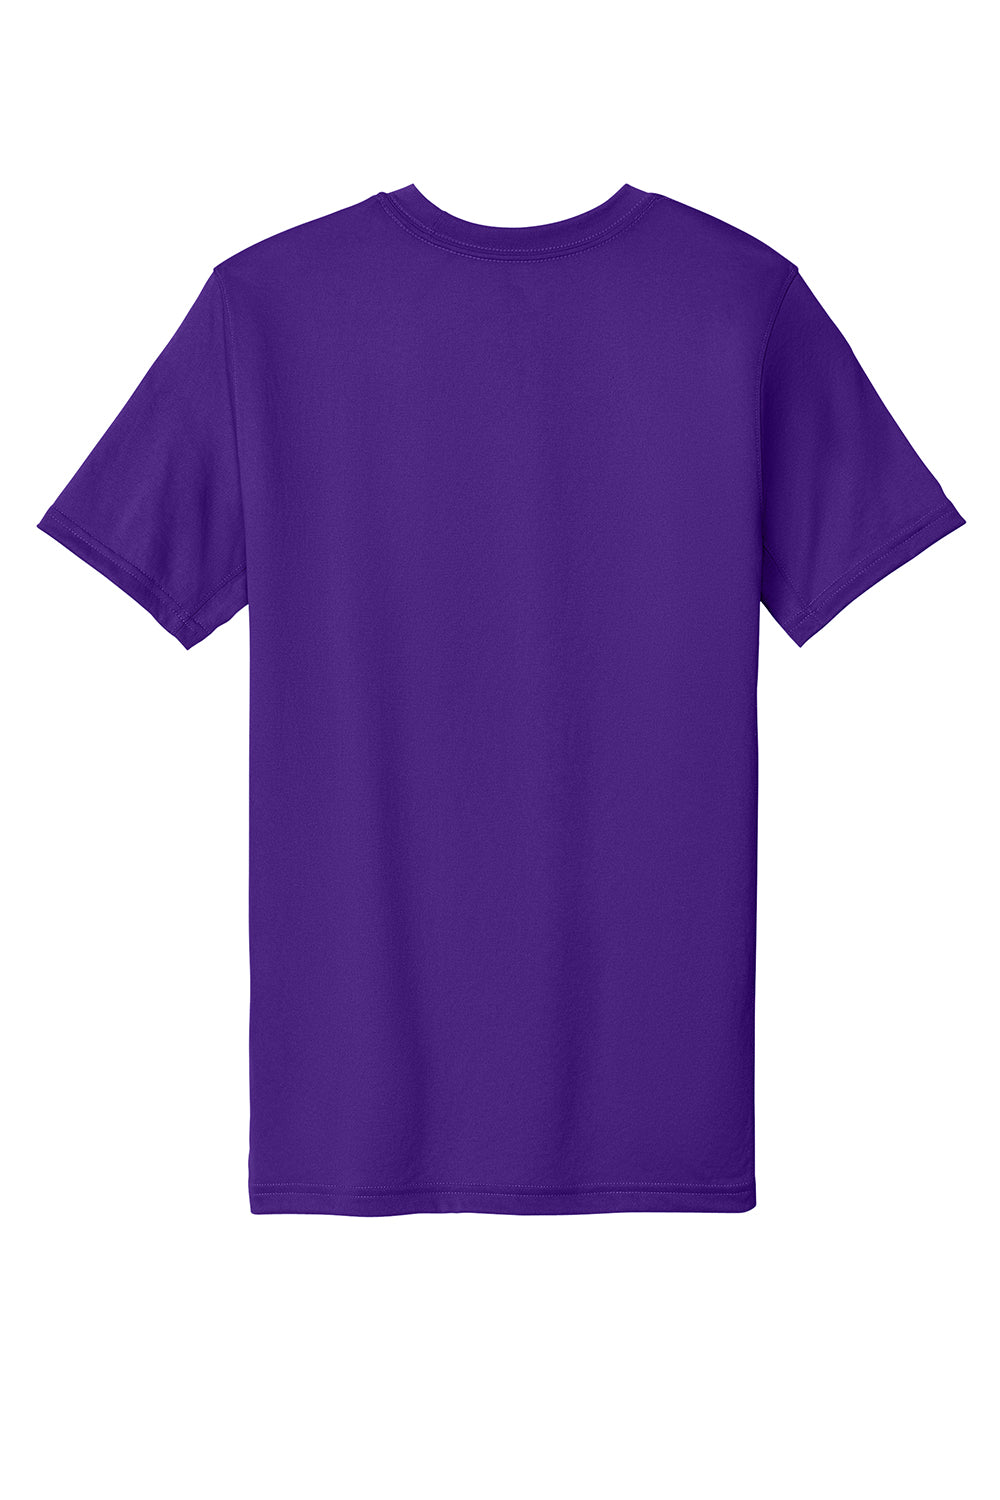 Nike NKDX8730 Mens rLegend Dri-Fit Moisture Wicking Short Sleeve Crewneck T-Shirt Court Purple Flat Back